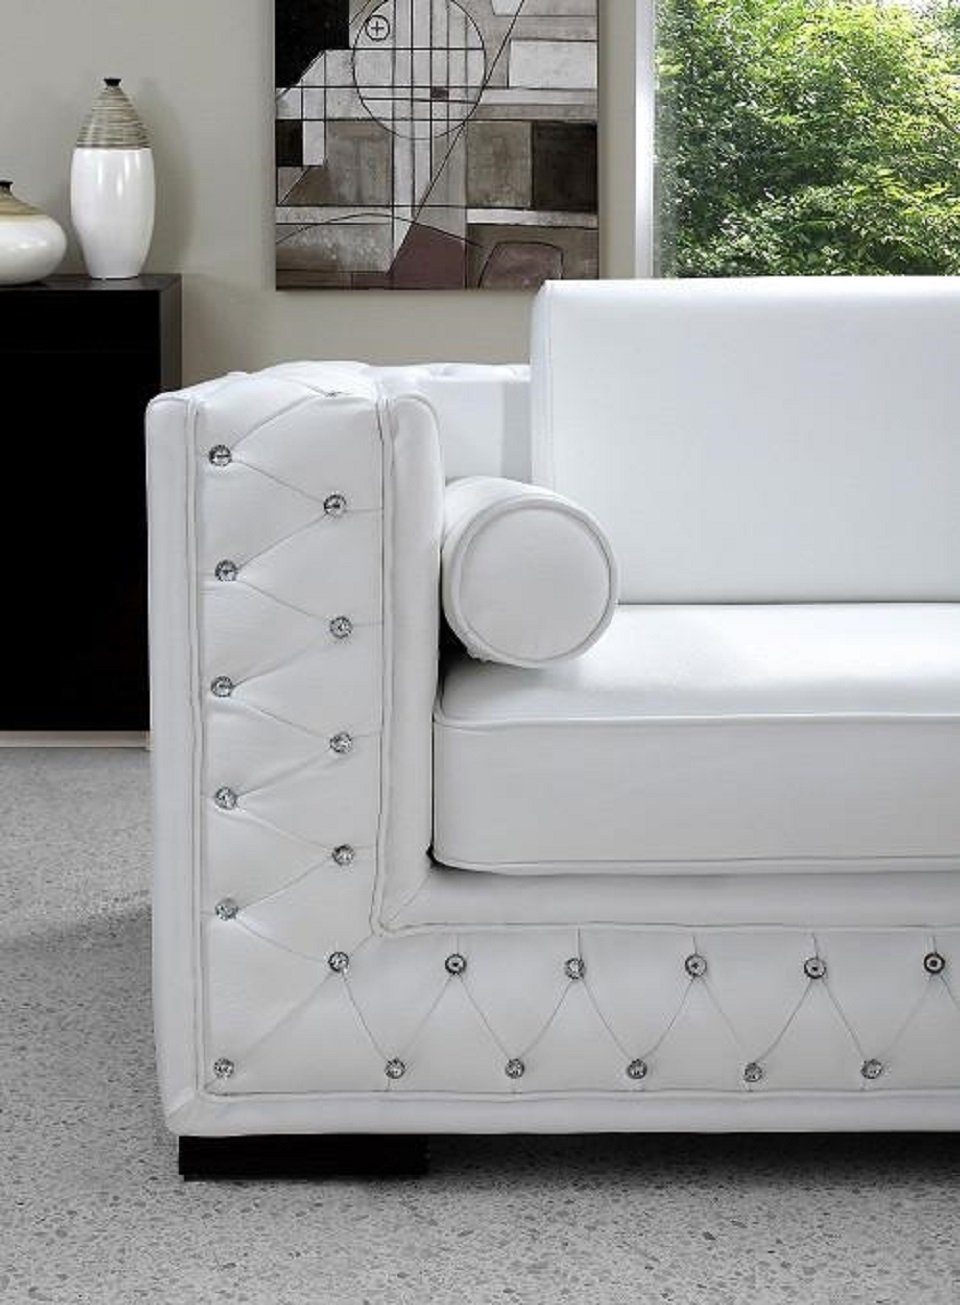 JVmoebel Sofa Sofas 3+2 Sofa Modern Ledersofa Neu, Design Made in Europe Couch Sitzer Wohnlandschaft